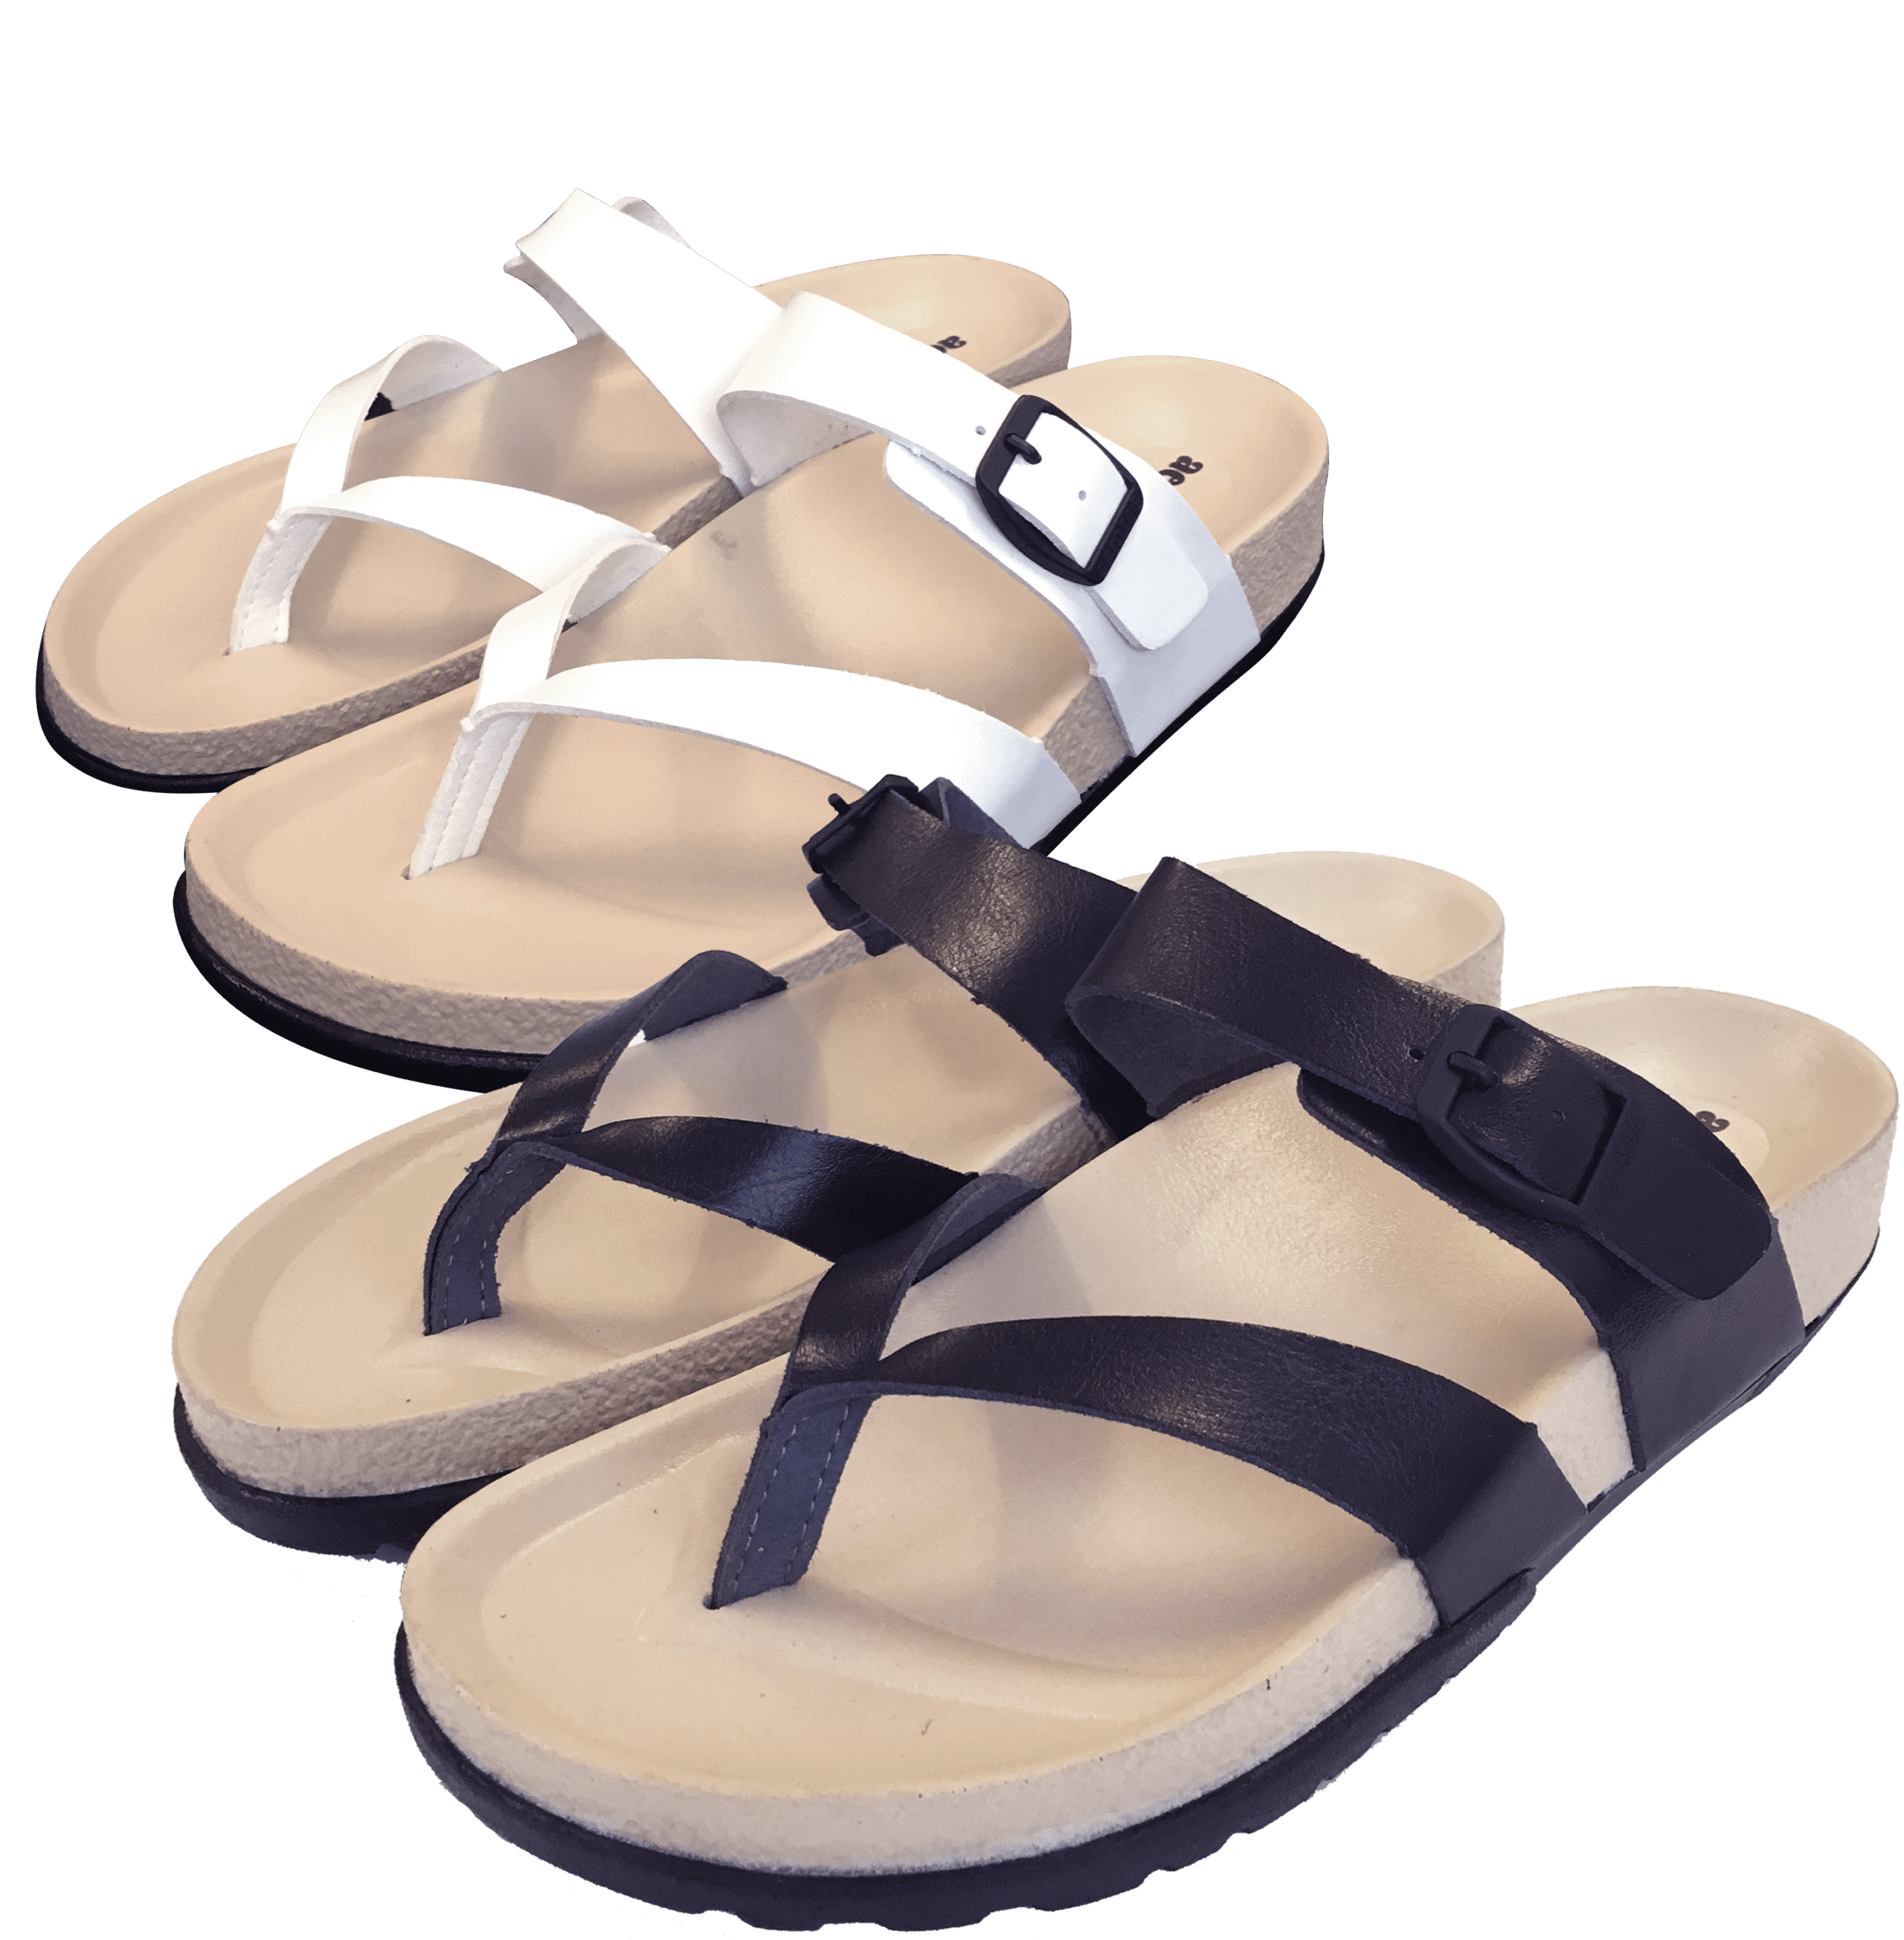 7: Sandaler Aerosoft Soft Unisex - hvid eller sort